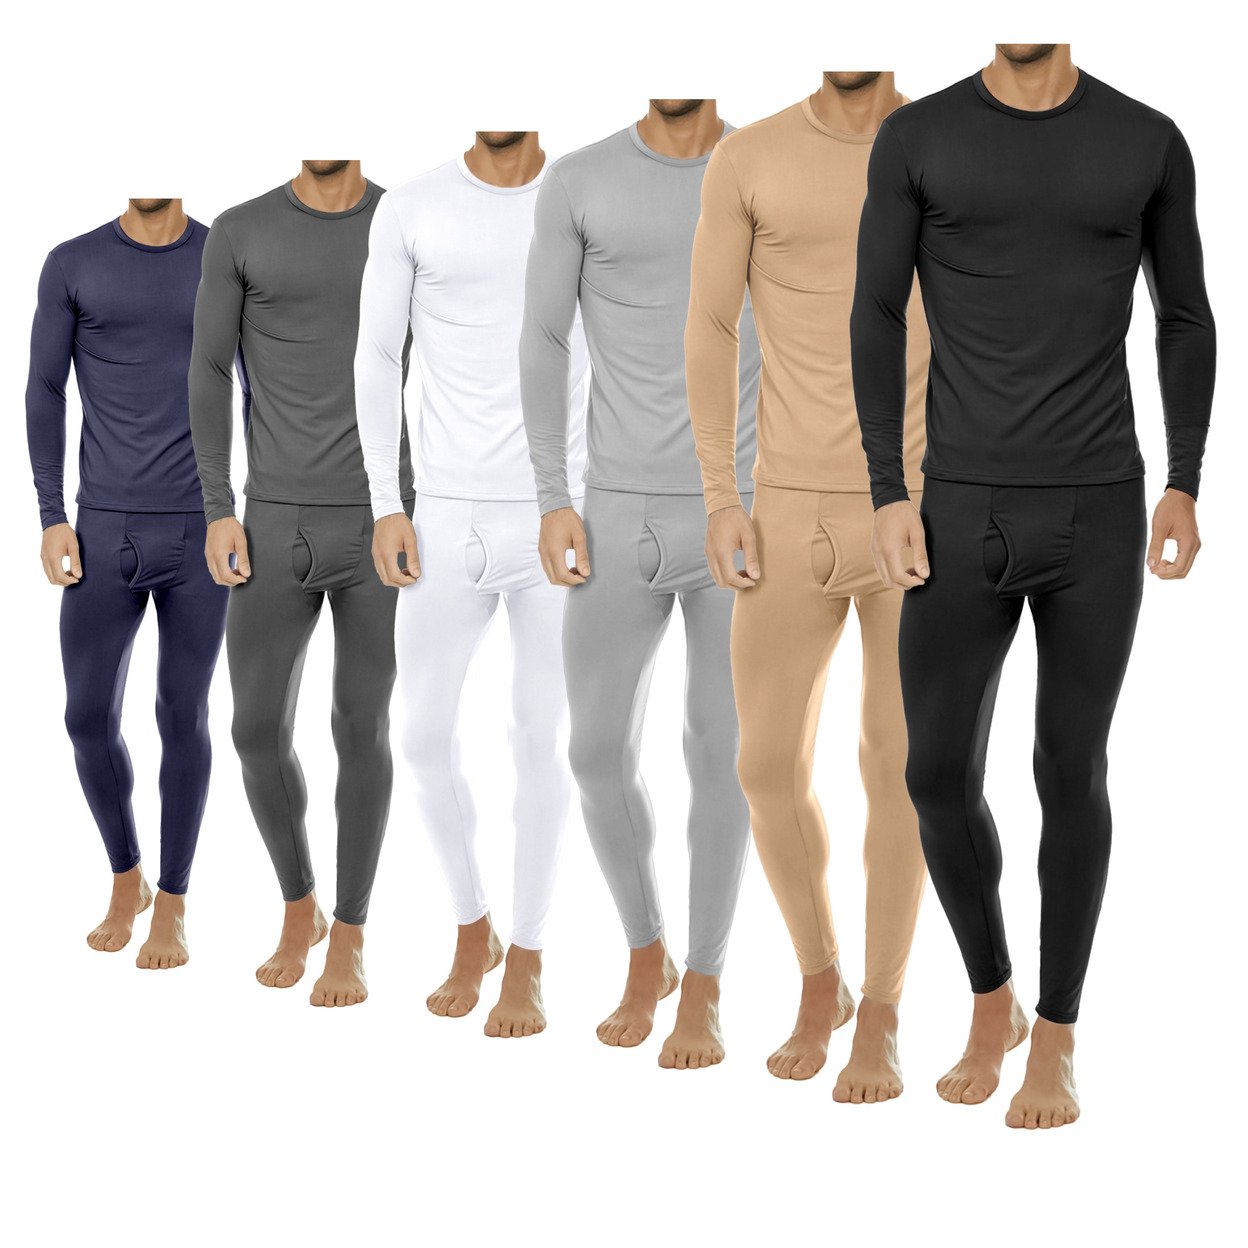 2-Sets: Men's Winter Warm Fleece Lined Thermal Underwear Set For Cold Weather - Black&white, Medium